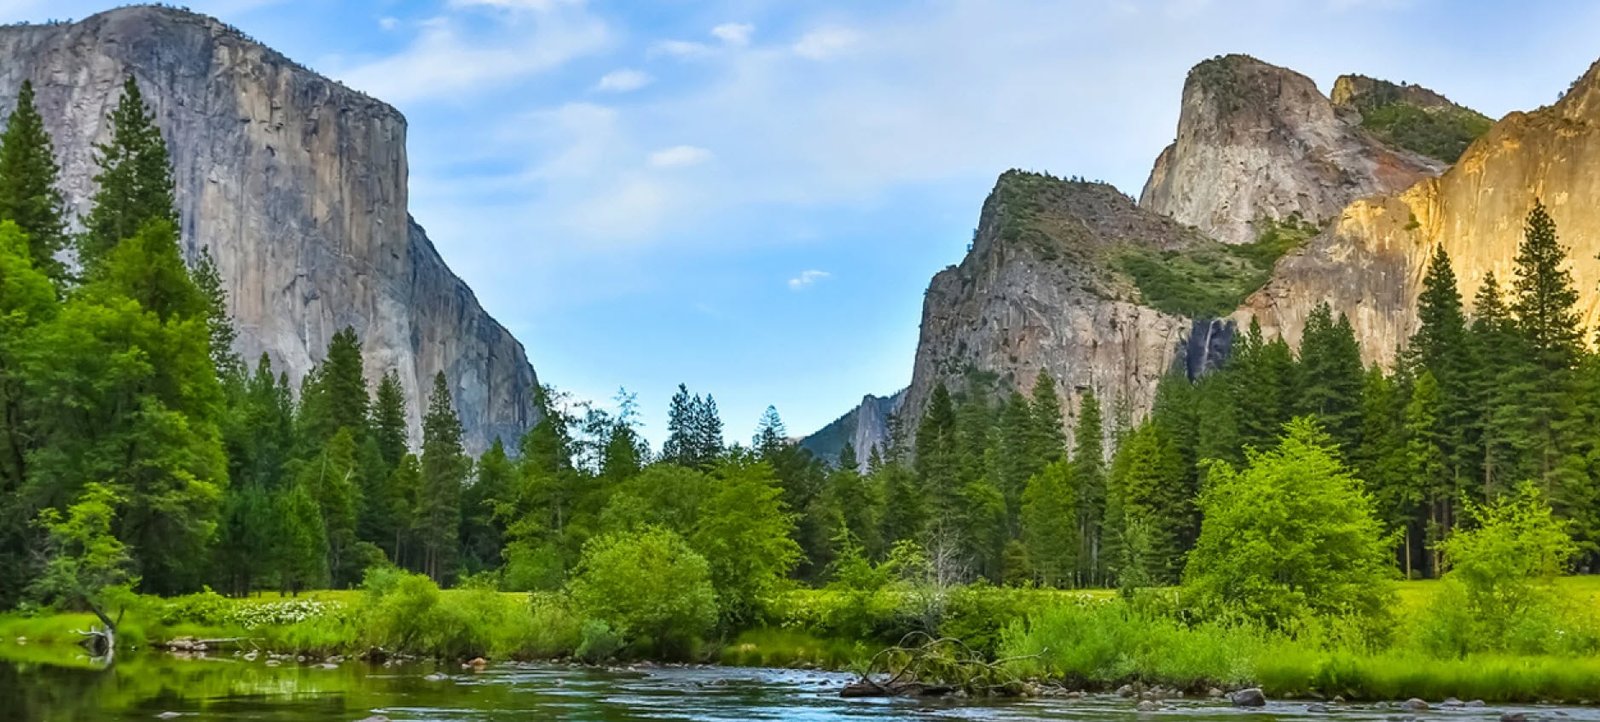 Yosemite National Park - California USA Bucket List Travelhyme